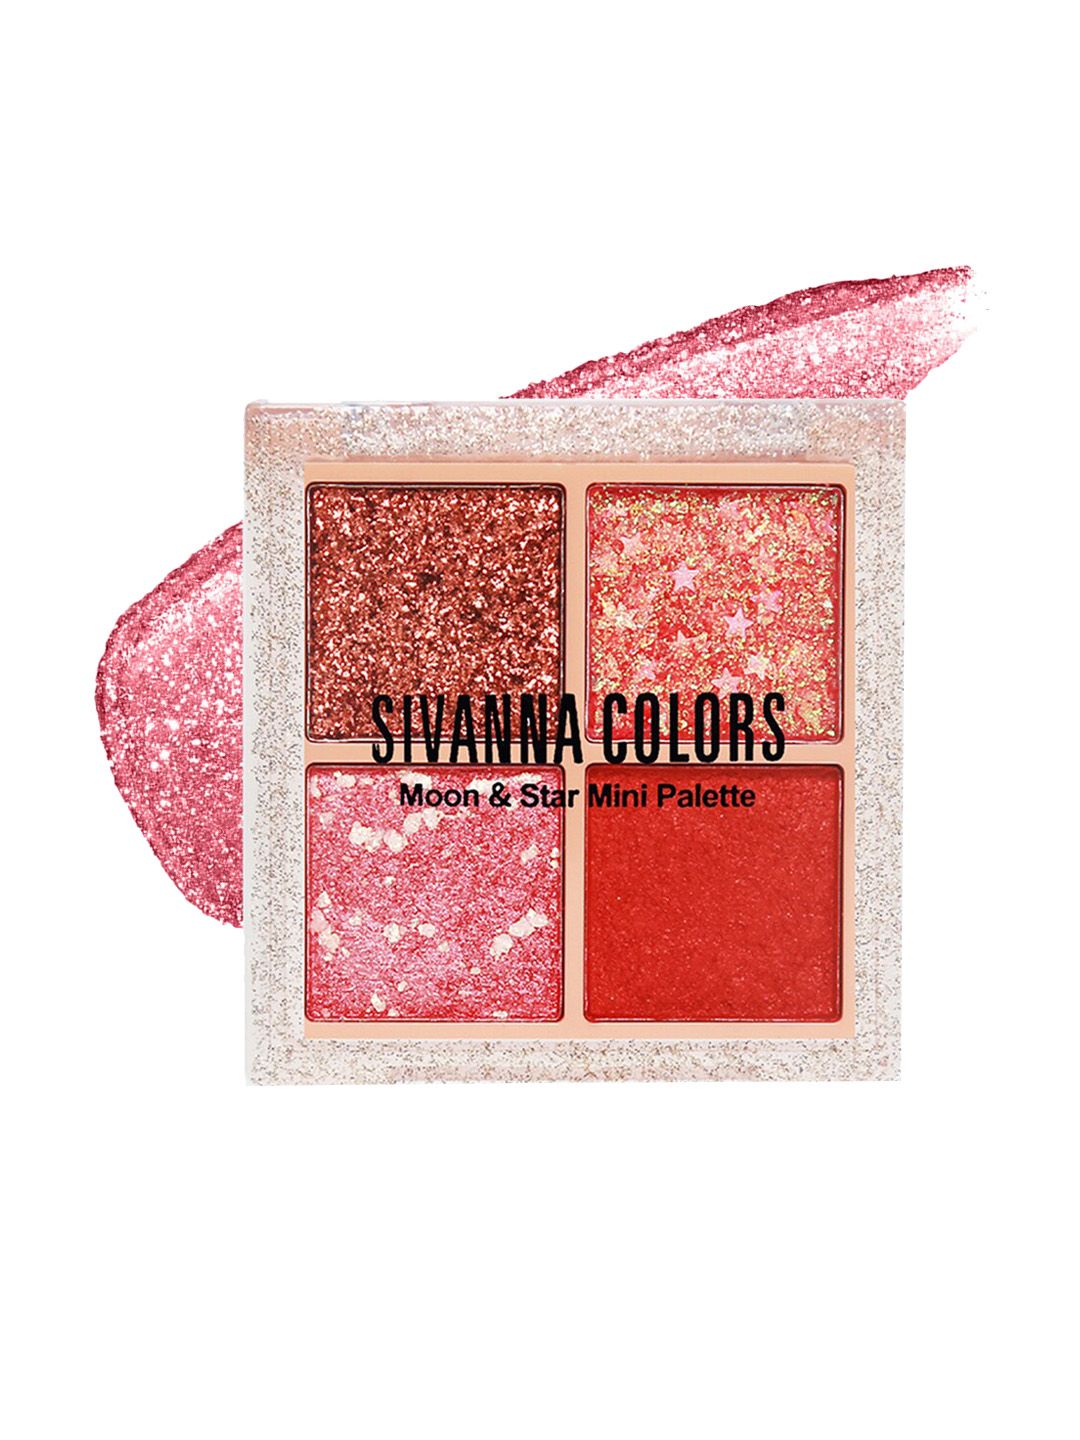 Sivanna Colors Moon & Star Mini Palette - HF6040 03 Price in India